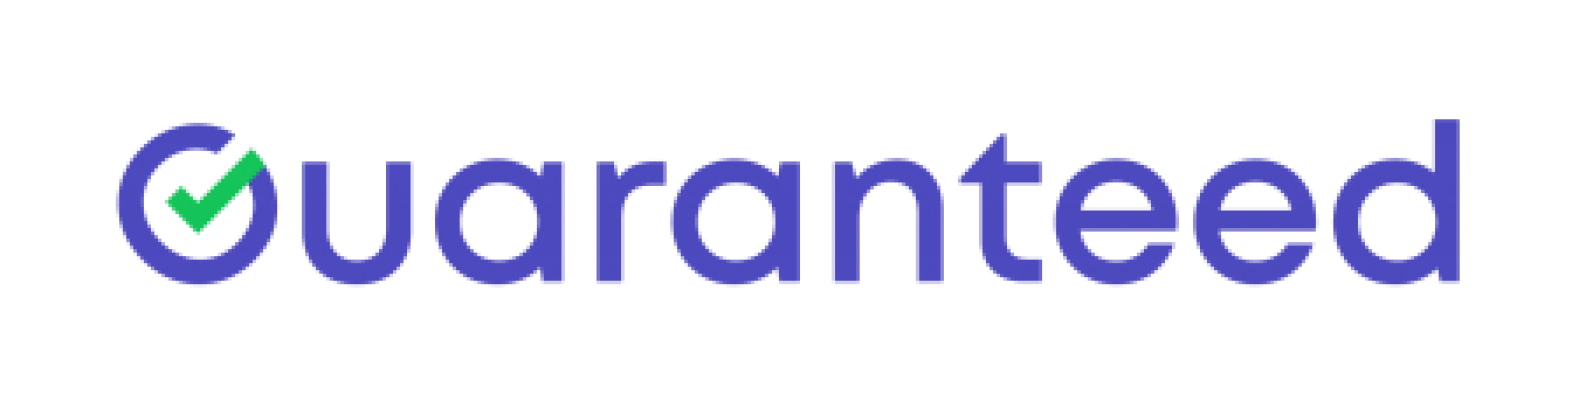 quaranteed logo